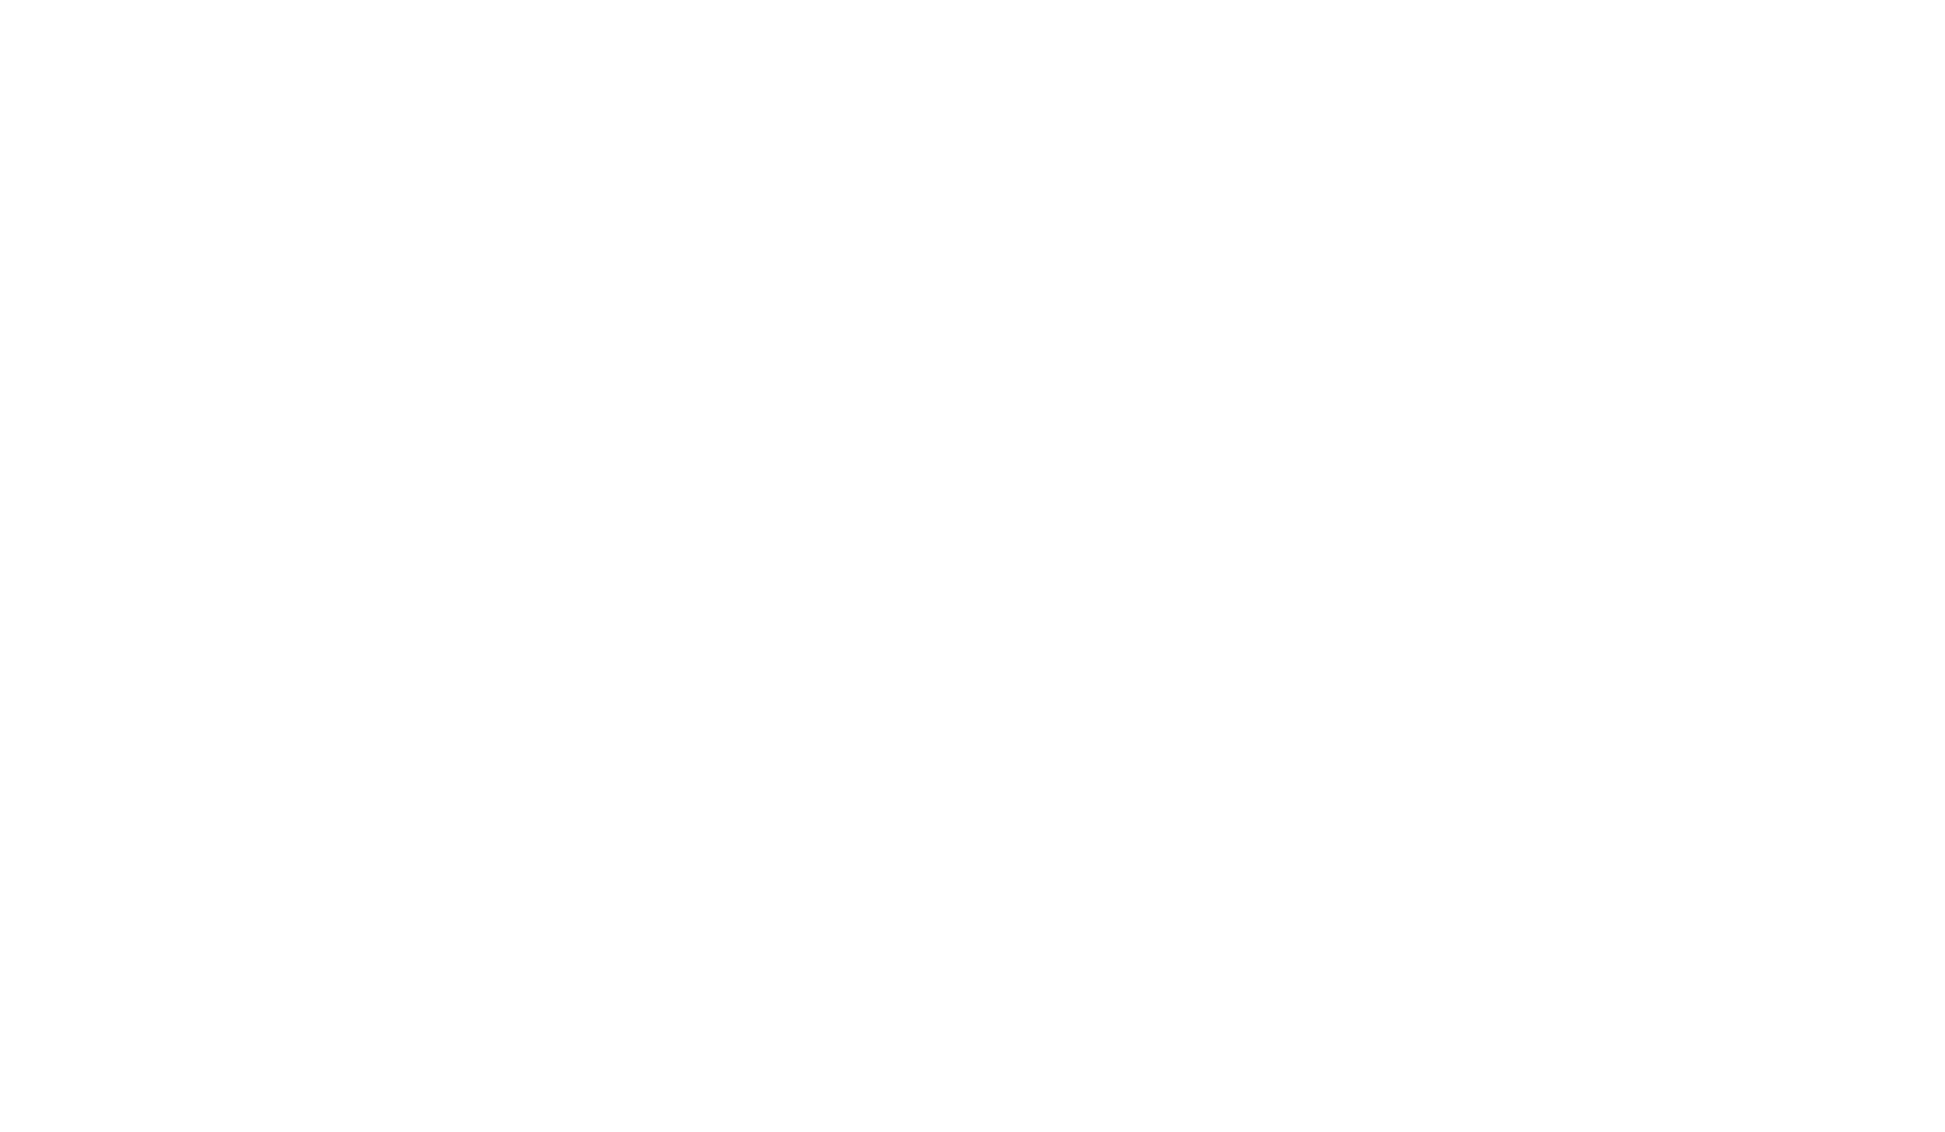 line graph of portland's growing population